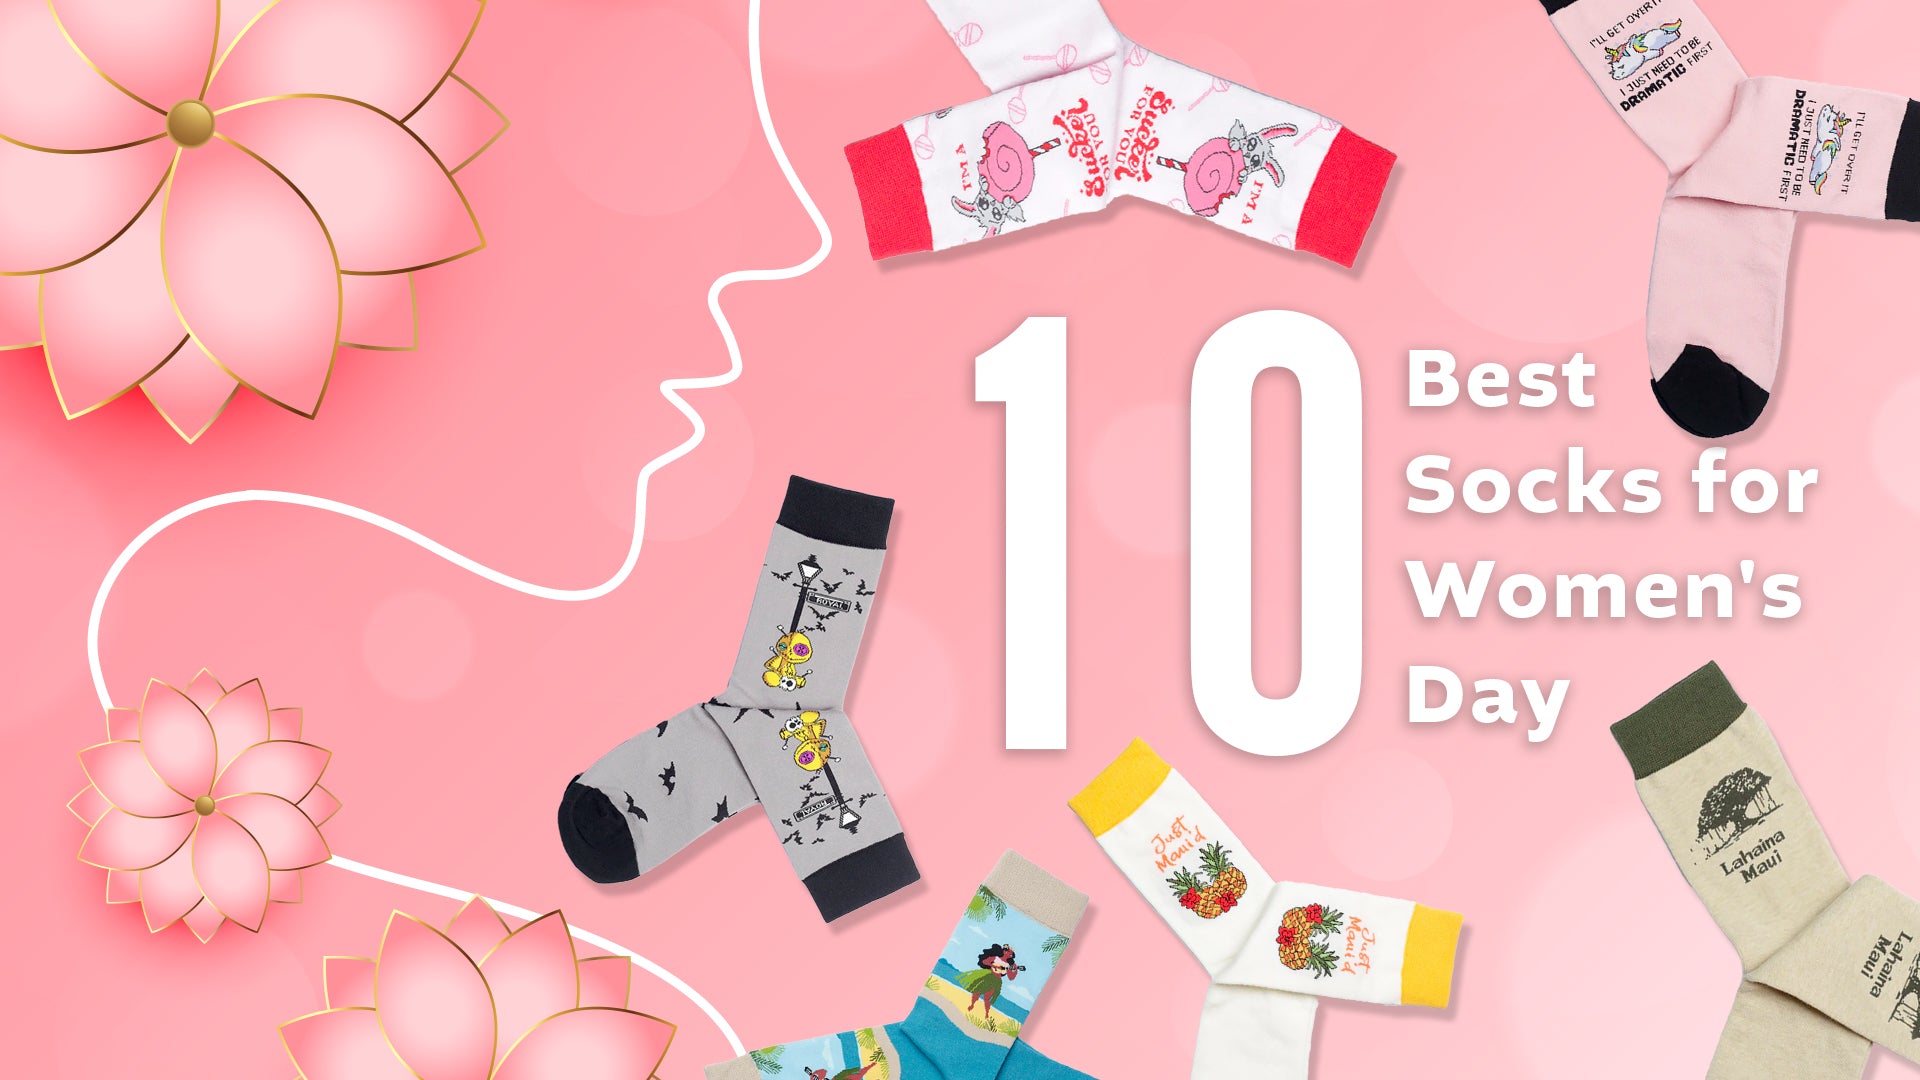 10 Best Socks for Women's Day - Just Fun Socks Edition